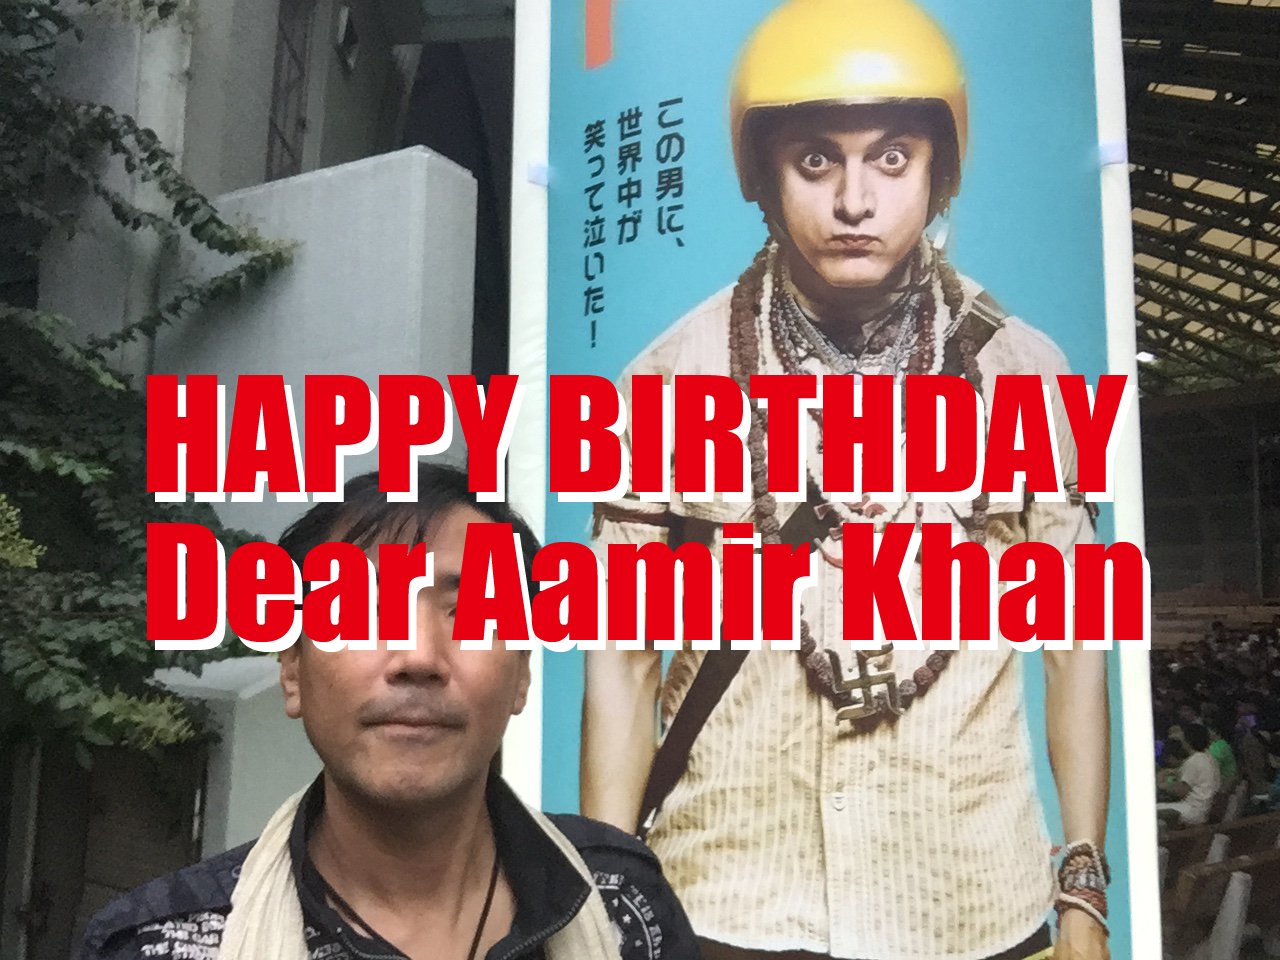                  HAPPY BIRTHDAY AamirKhan    